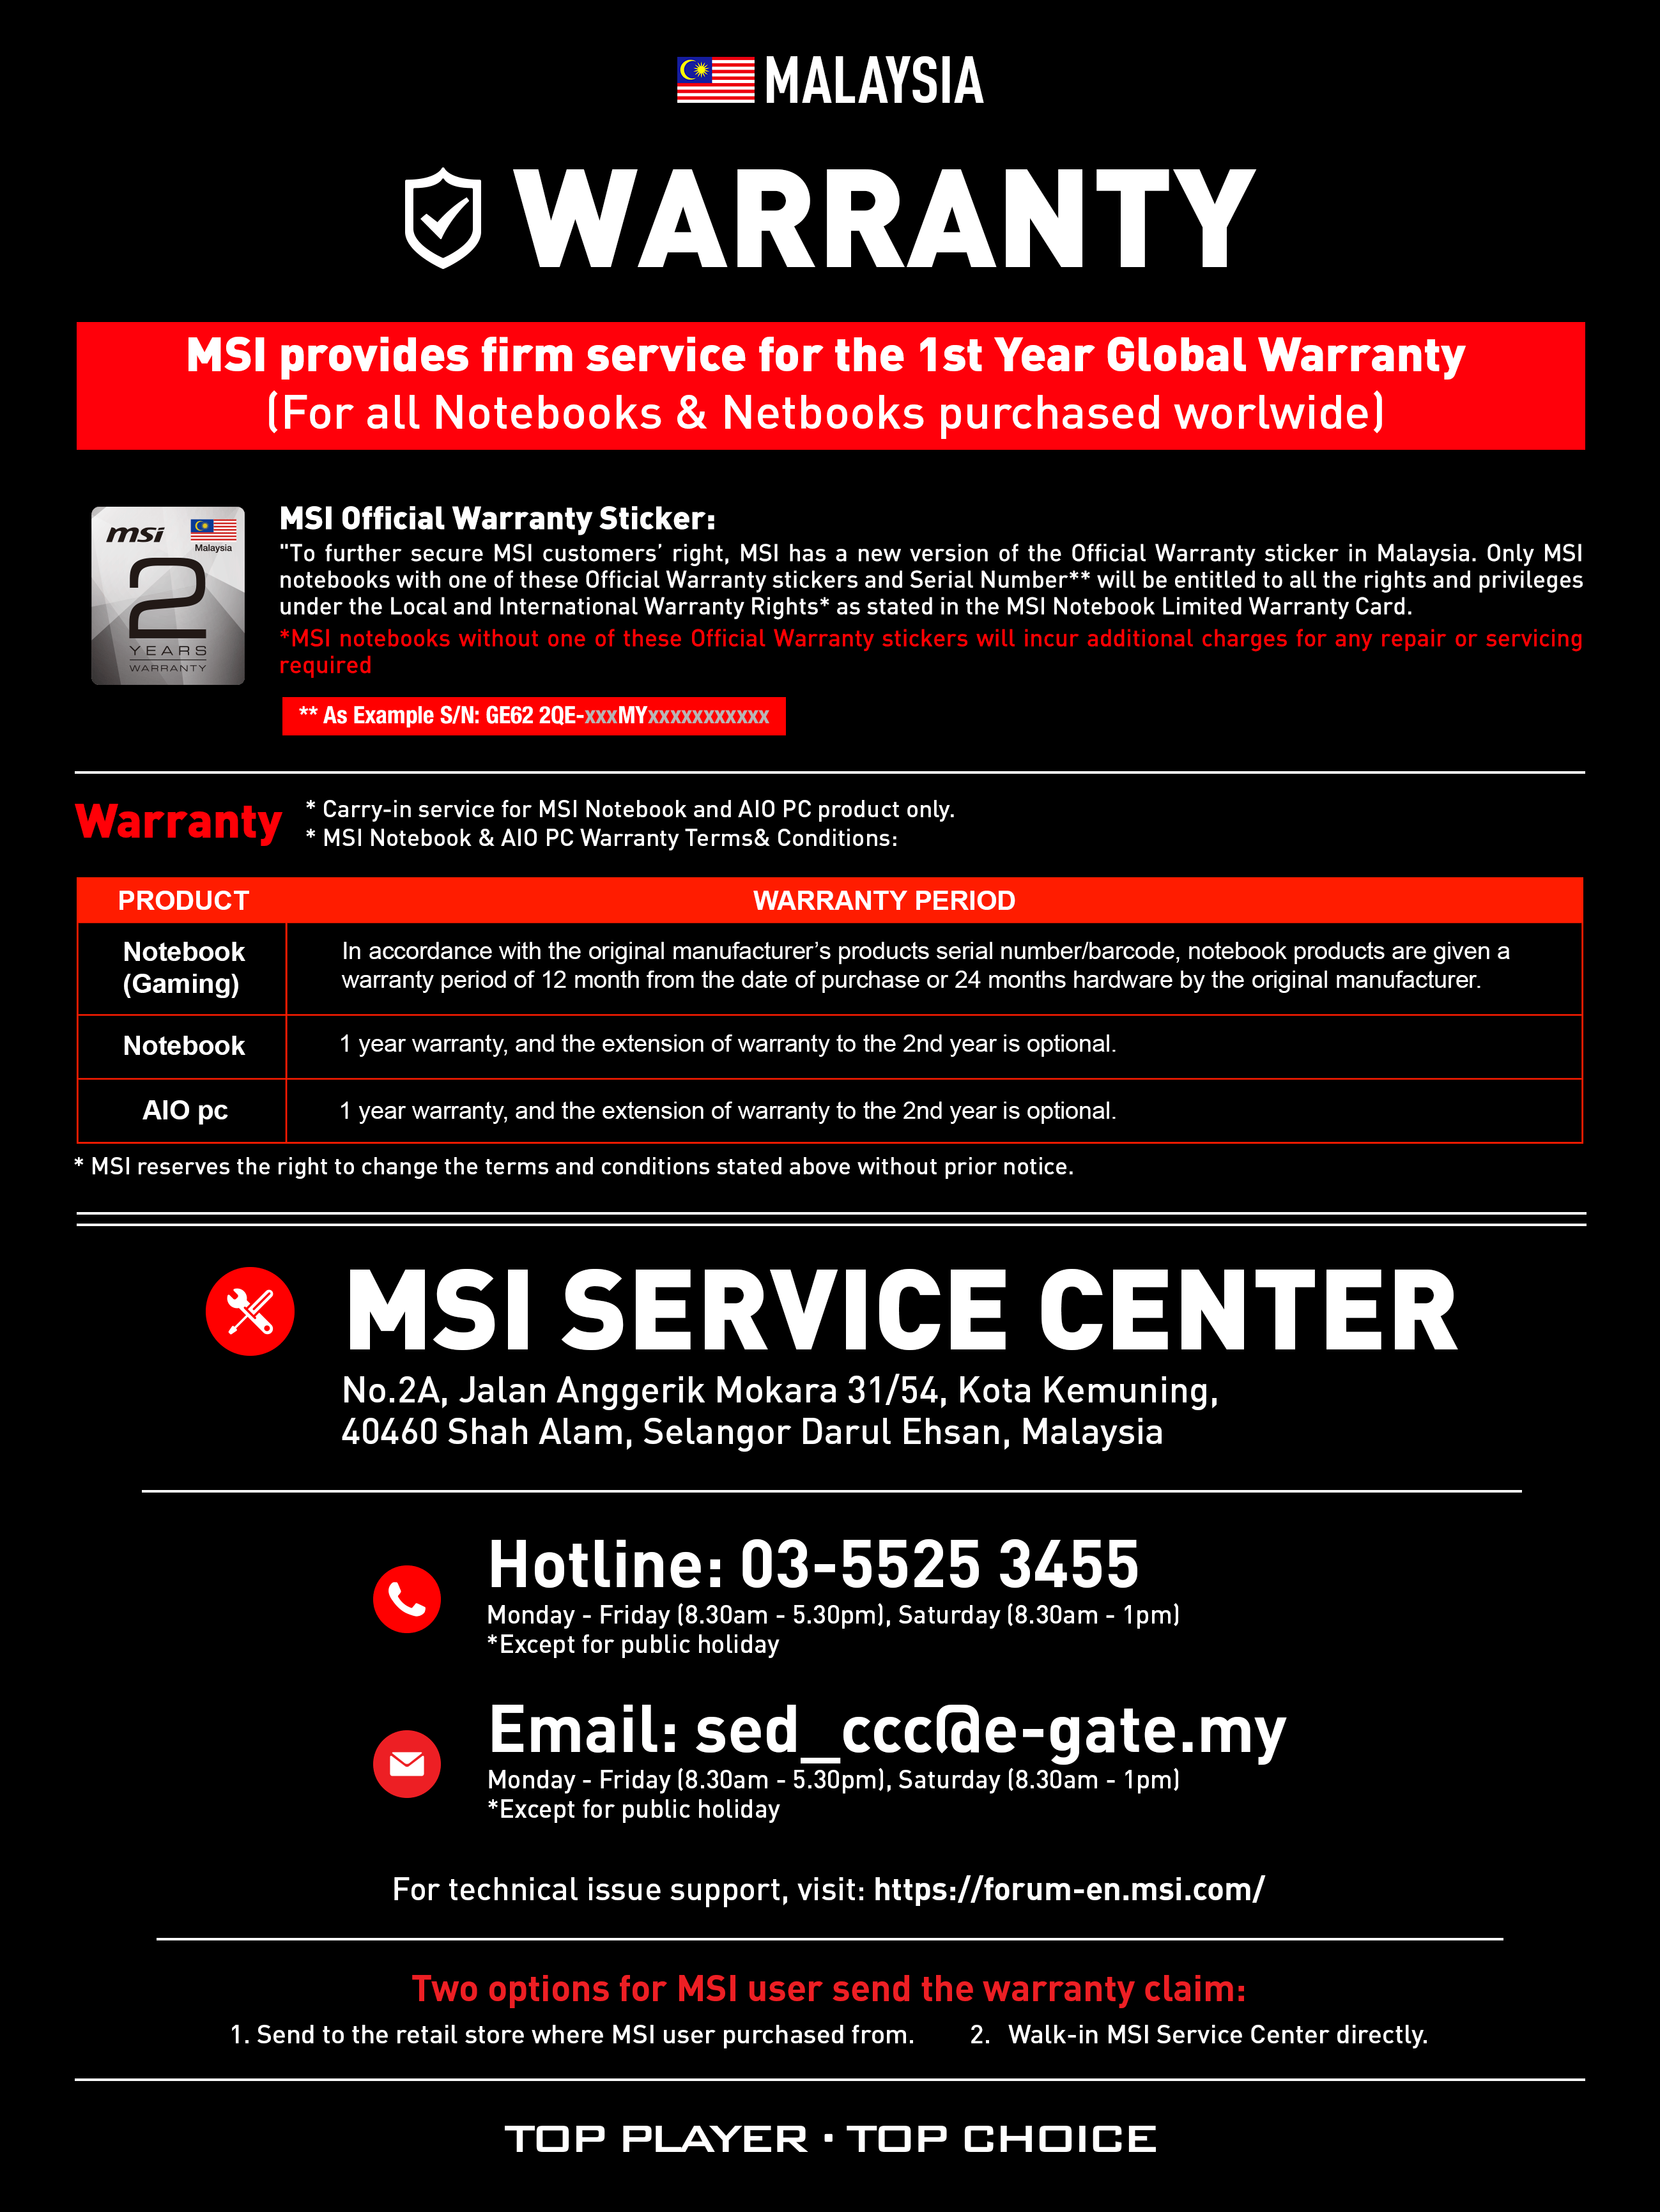 msi authorized service center near me